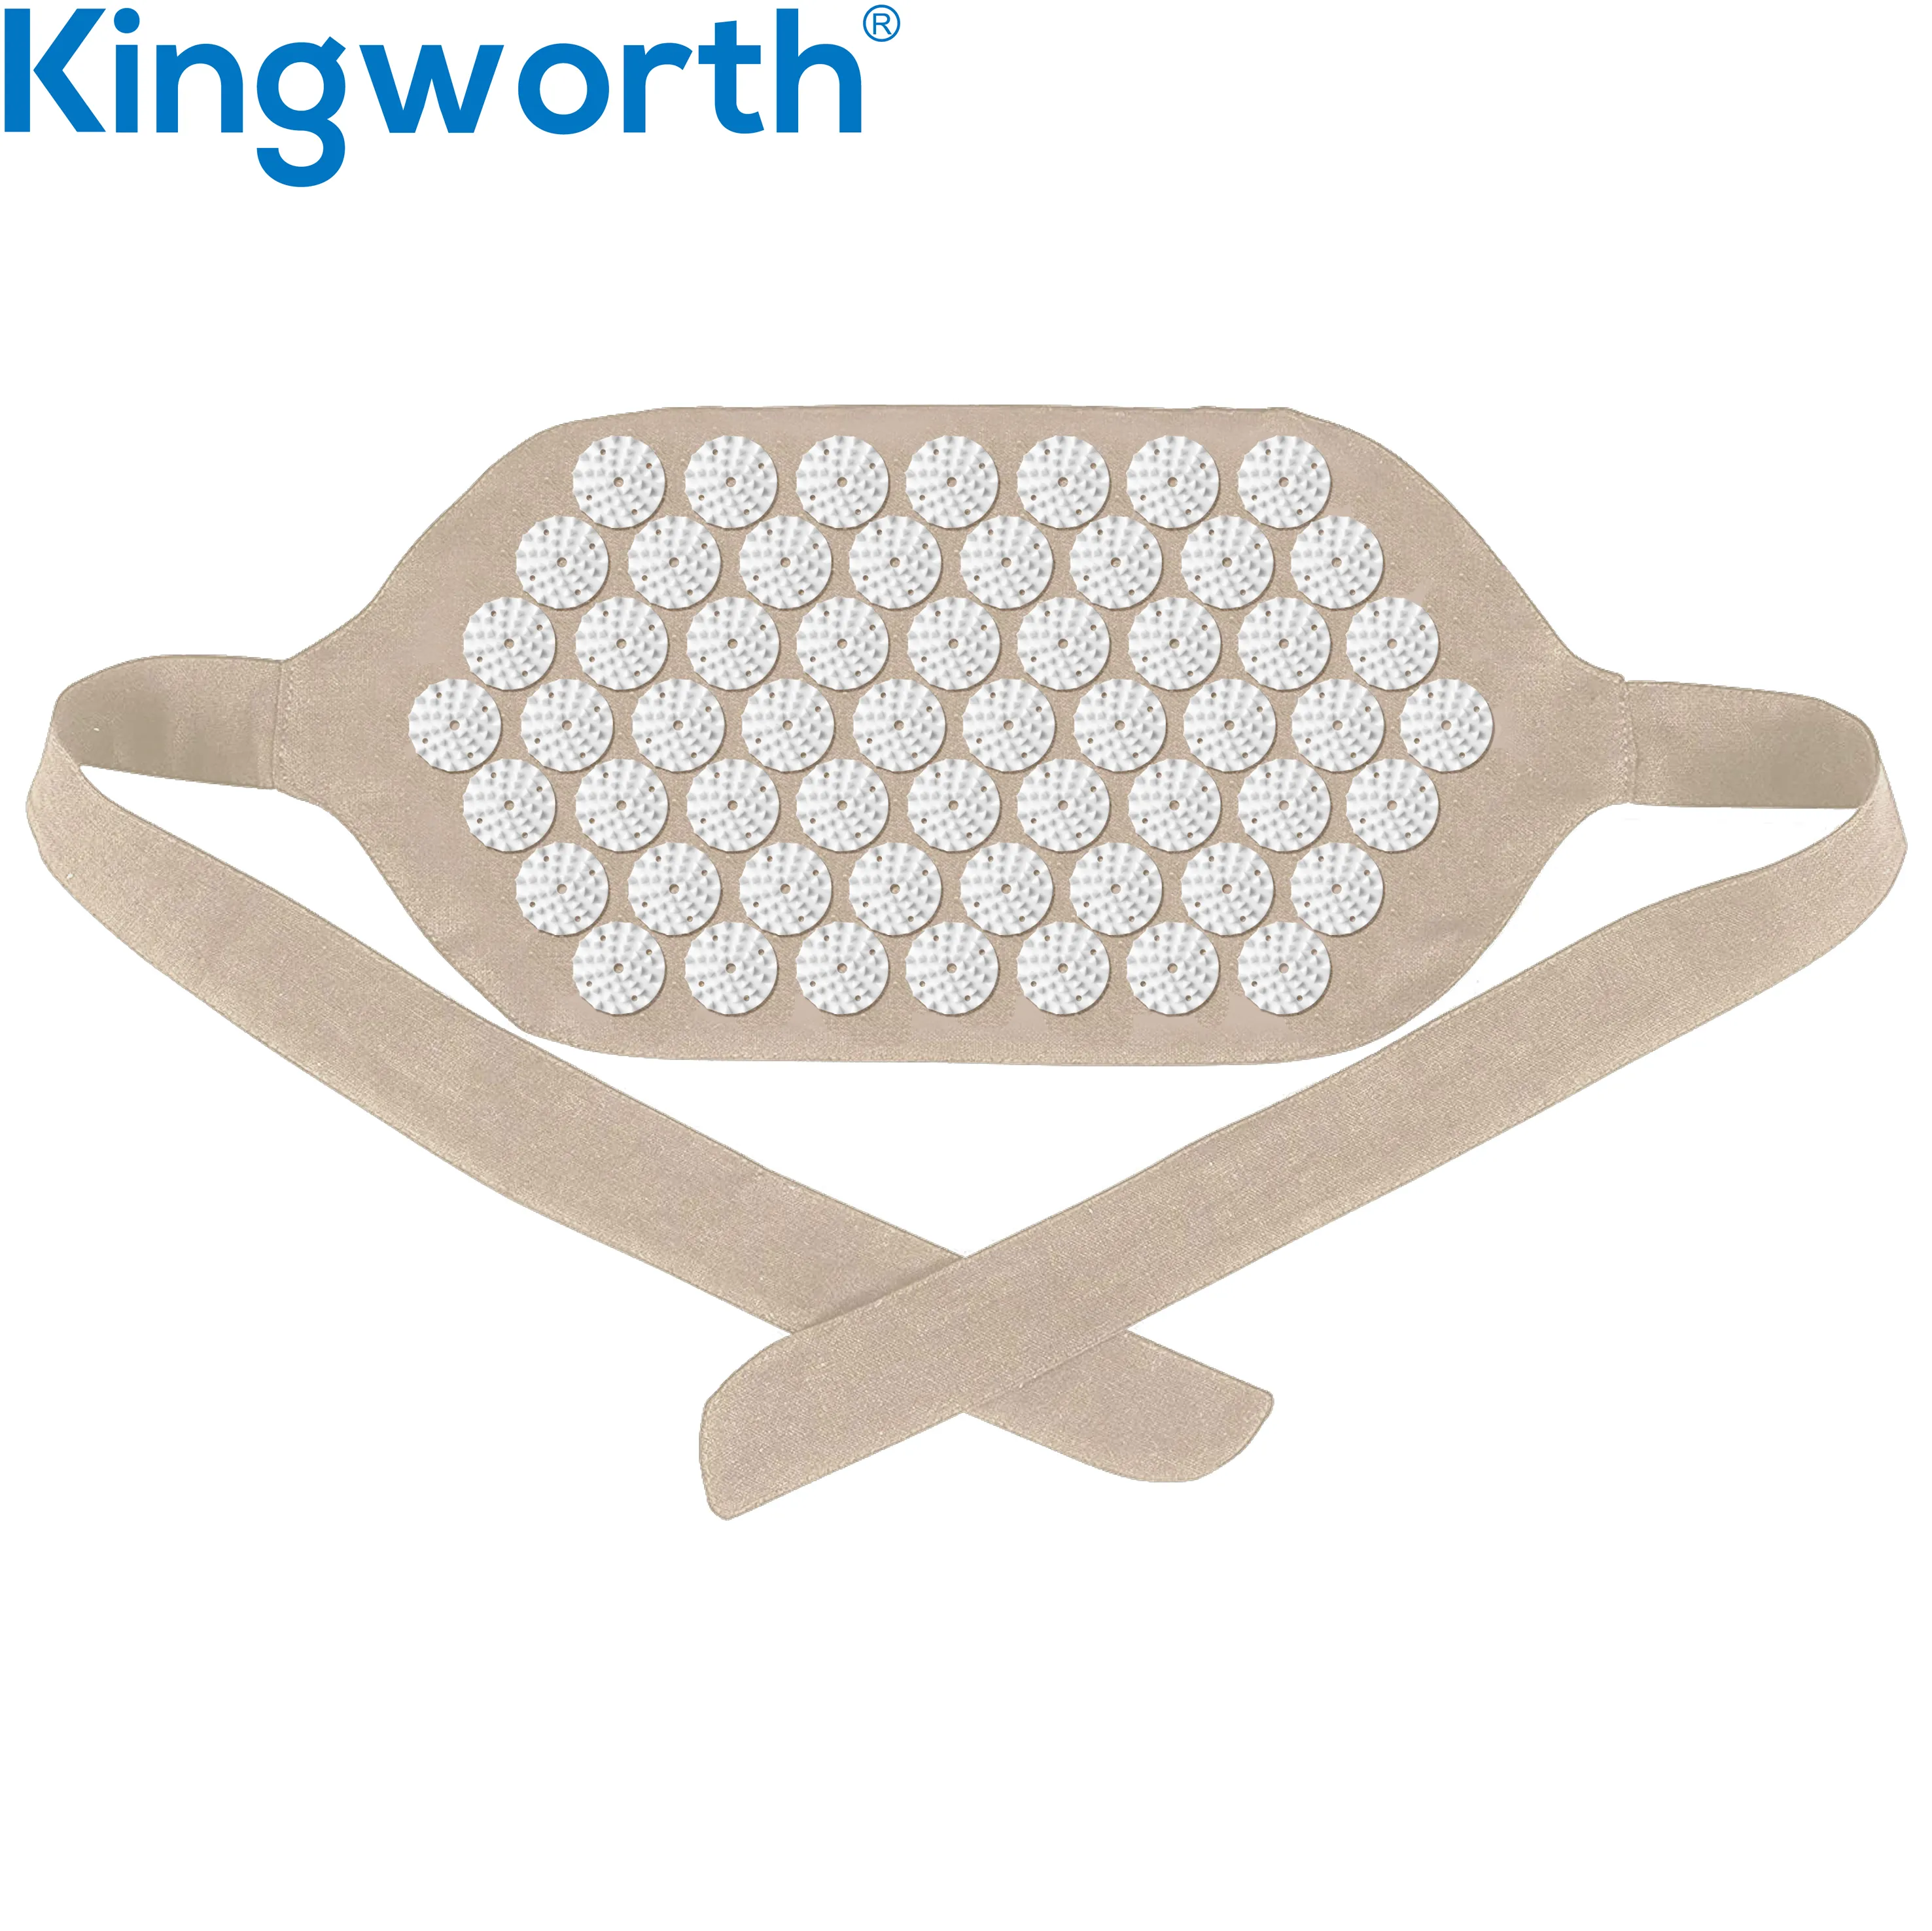 Kingworth sabuk akupunktur tali pelangsing, sabuk pijat pinggang untuk menghilangkan stres dan nyeri tubuh